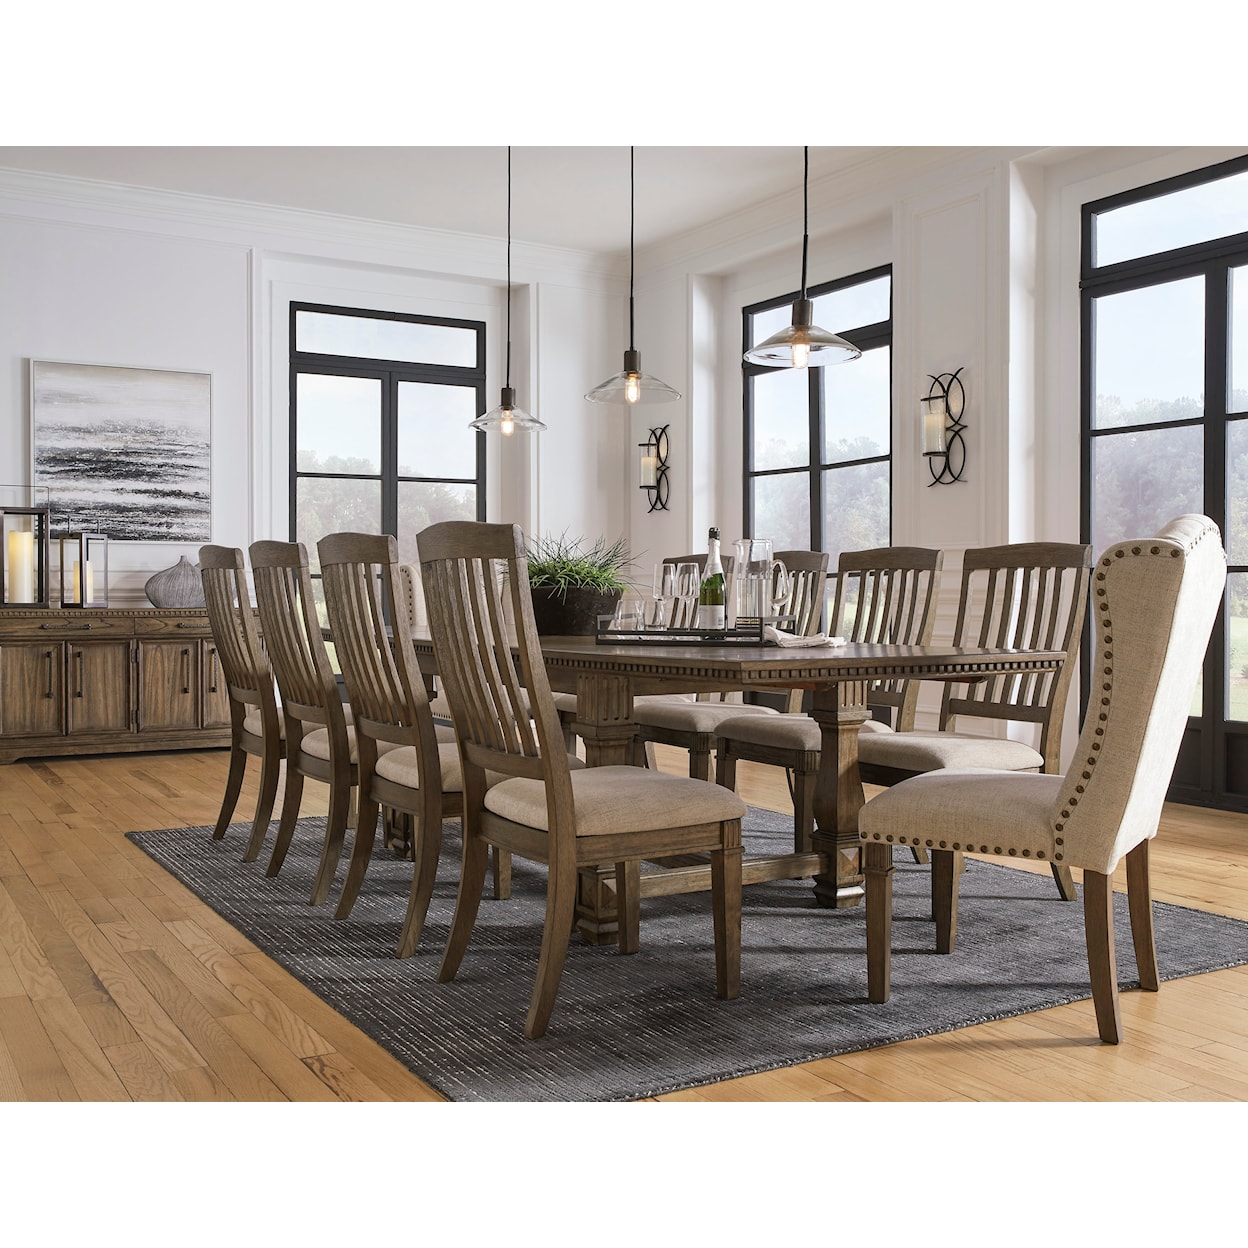 Ashley Furniture Signature Design Markenburg Dining Extension Table